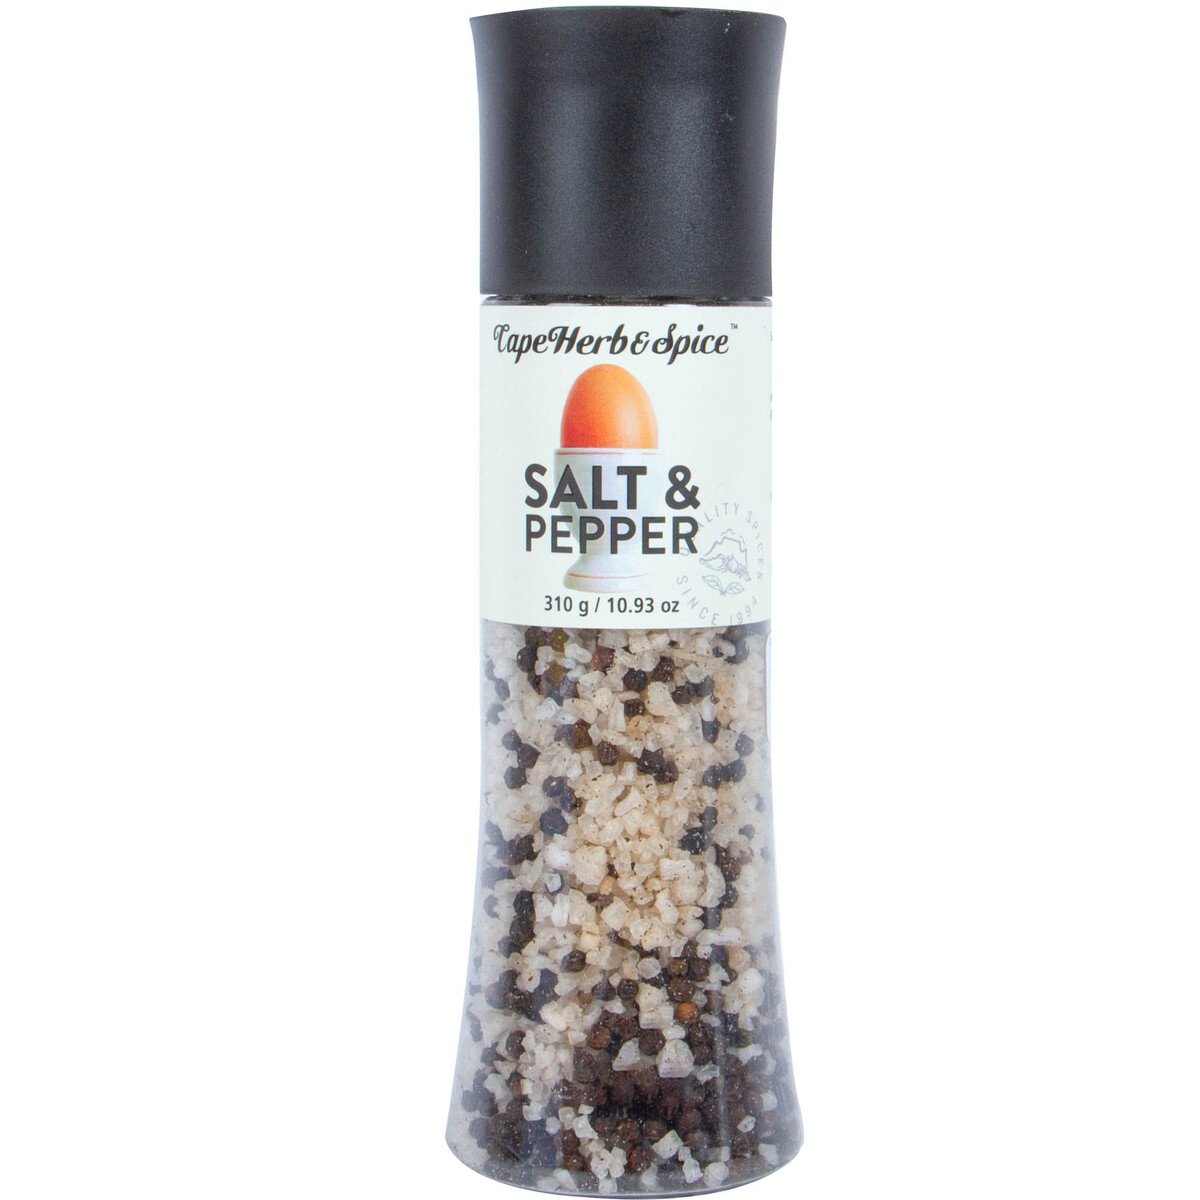 Cape Herb & Spice Salt & Pepper, 310 g